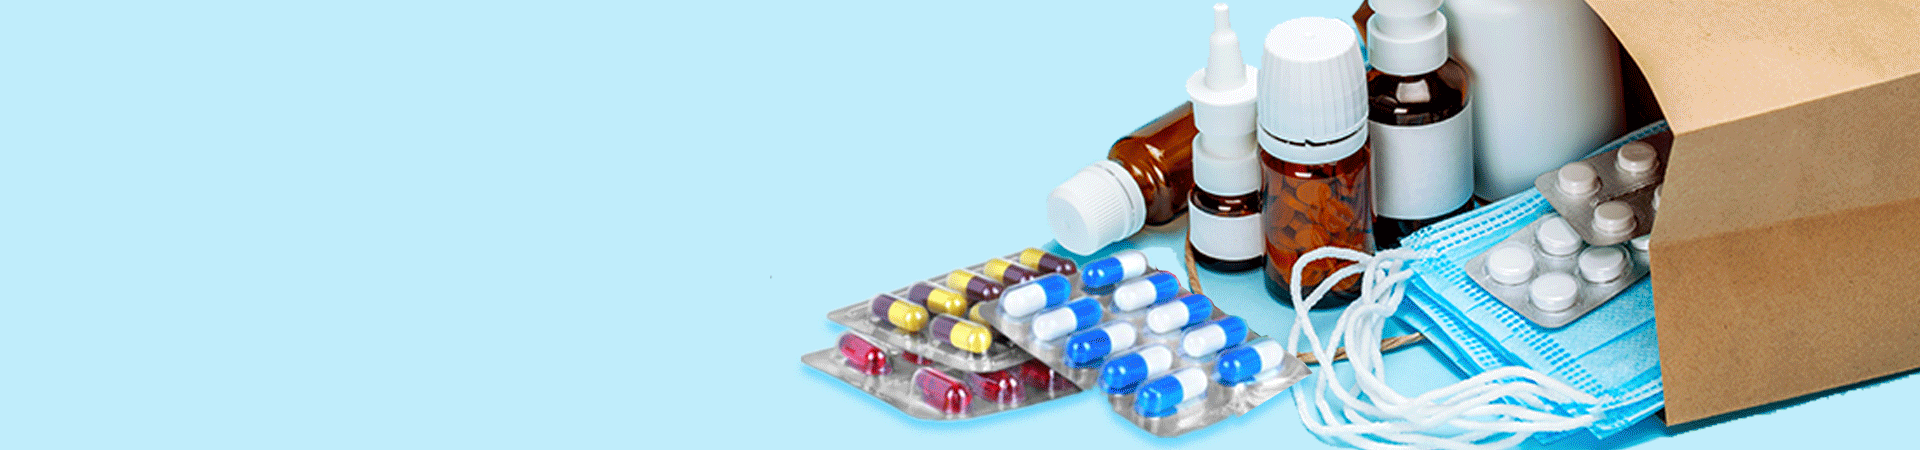 Trypsin - Chymotrypsin : Uses, Side Effects, Dosage, Precautions